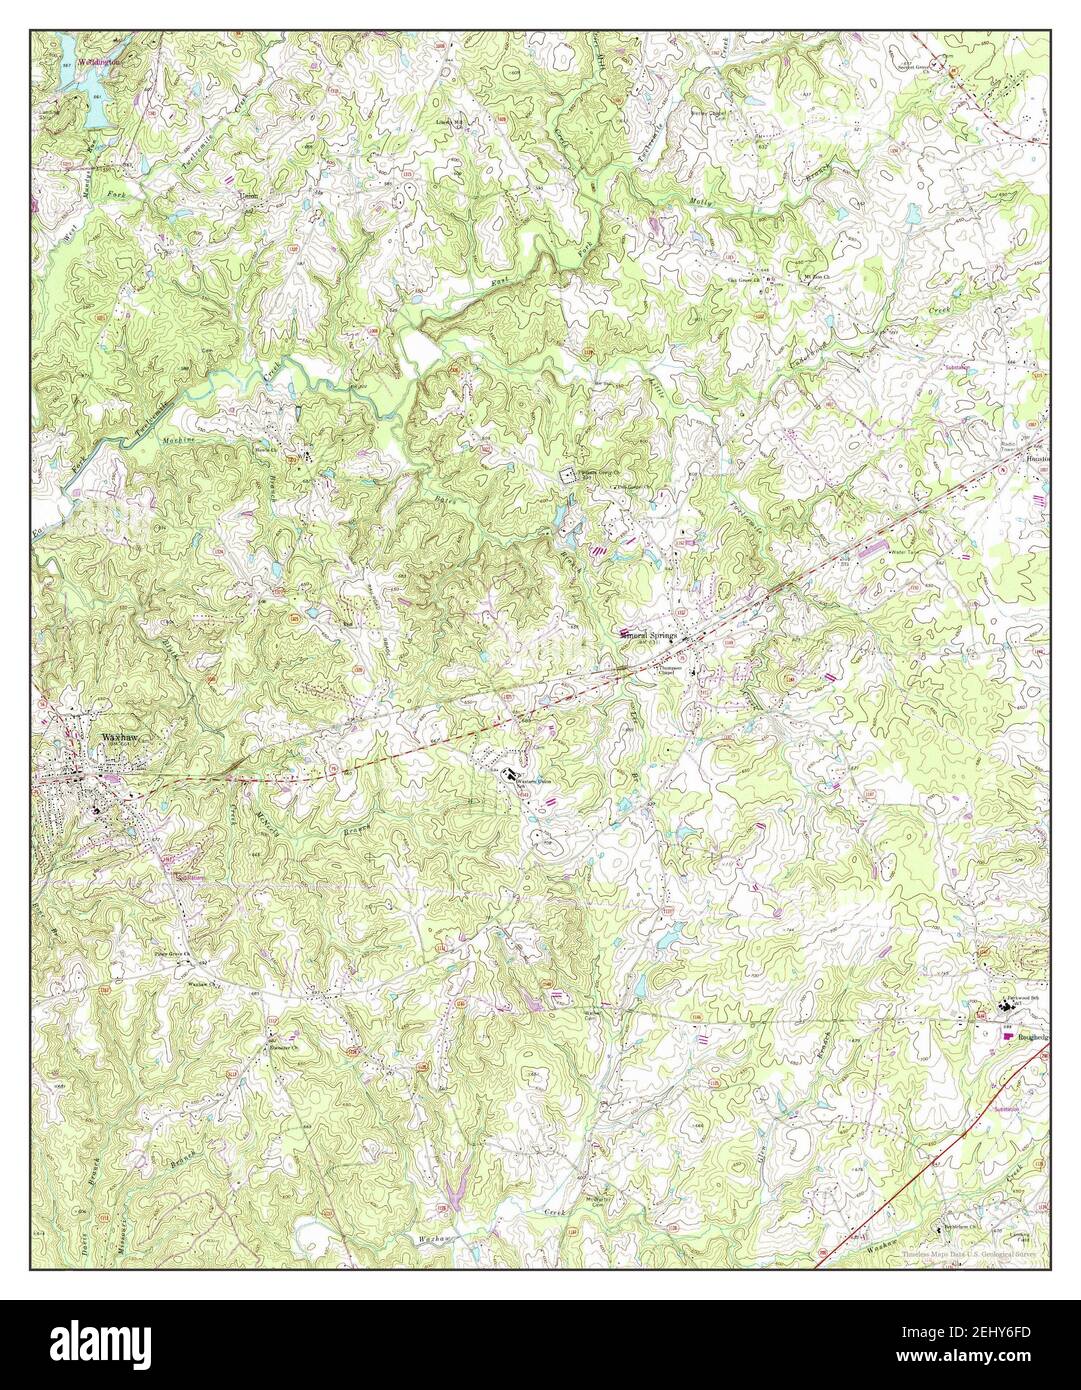 Waxhaw North Carolina Map 1970 124000 United States Of America By Timeless Maps Data Us 7017